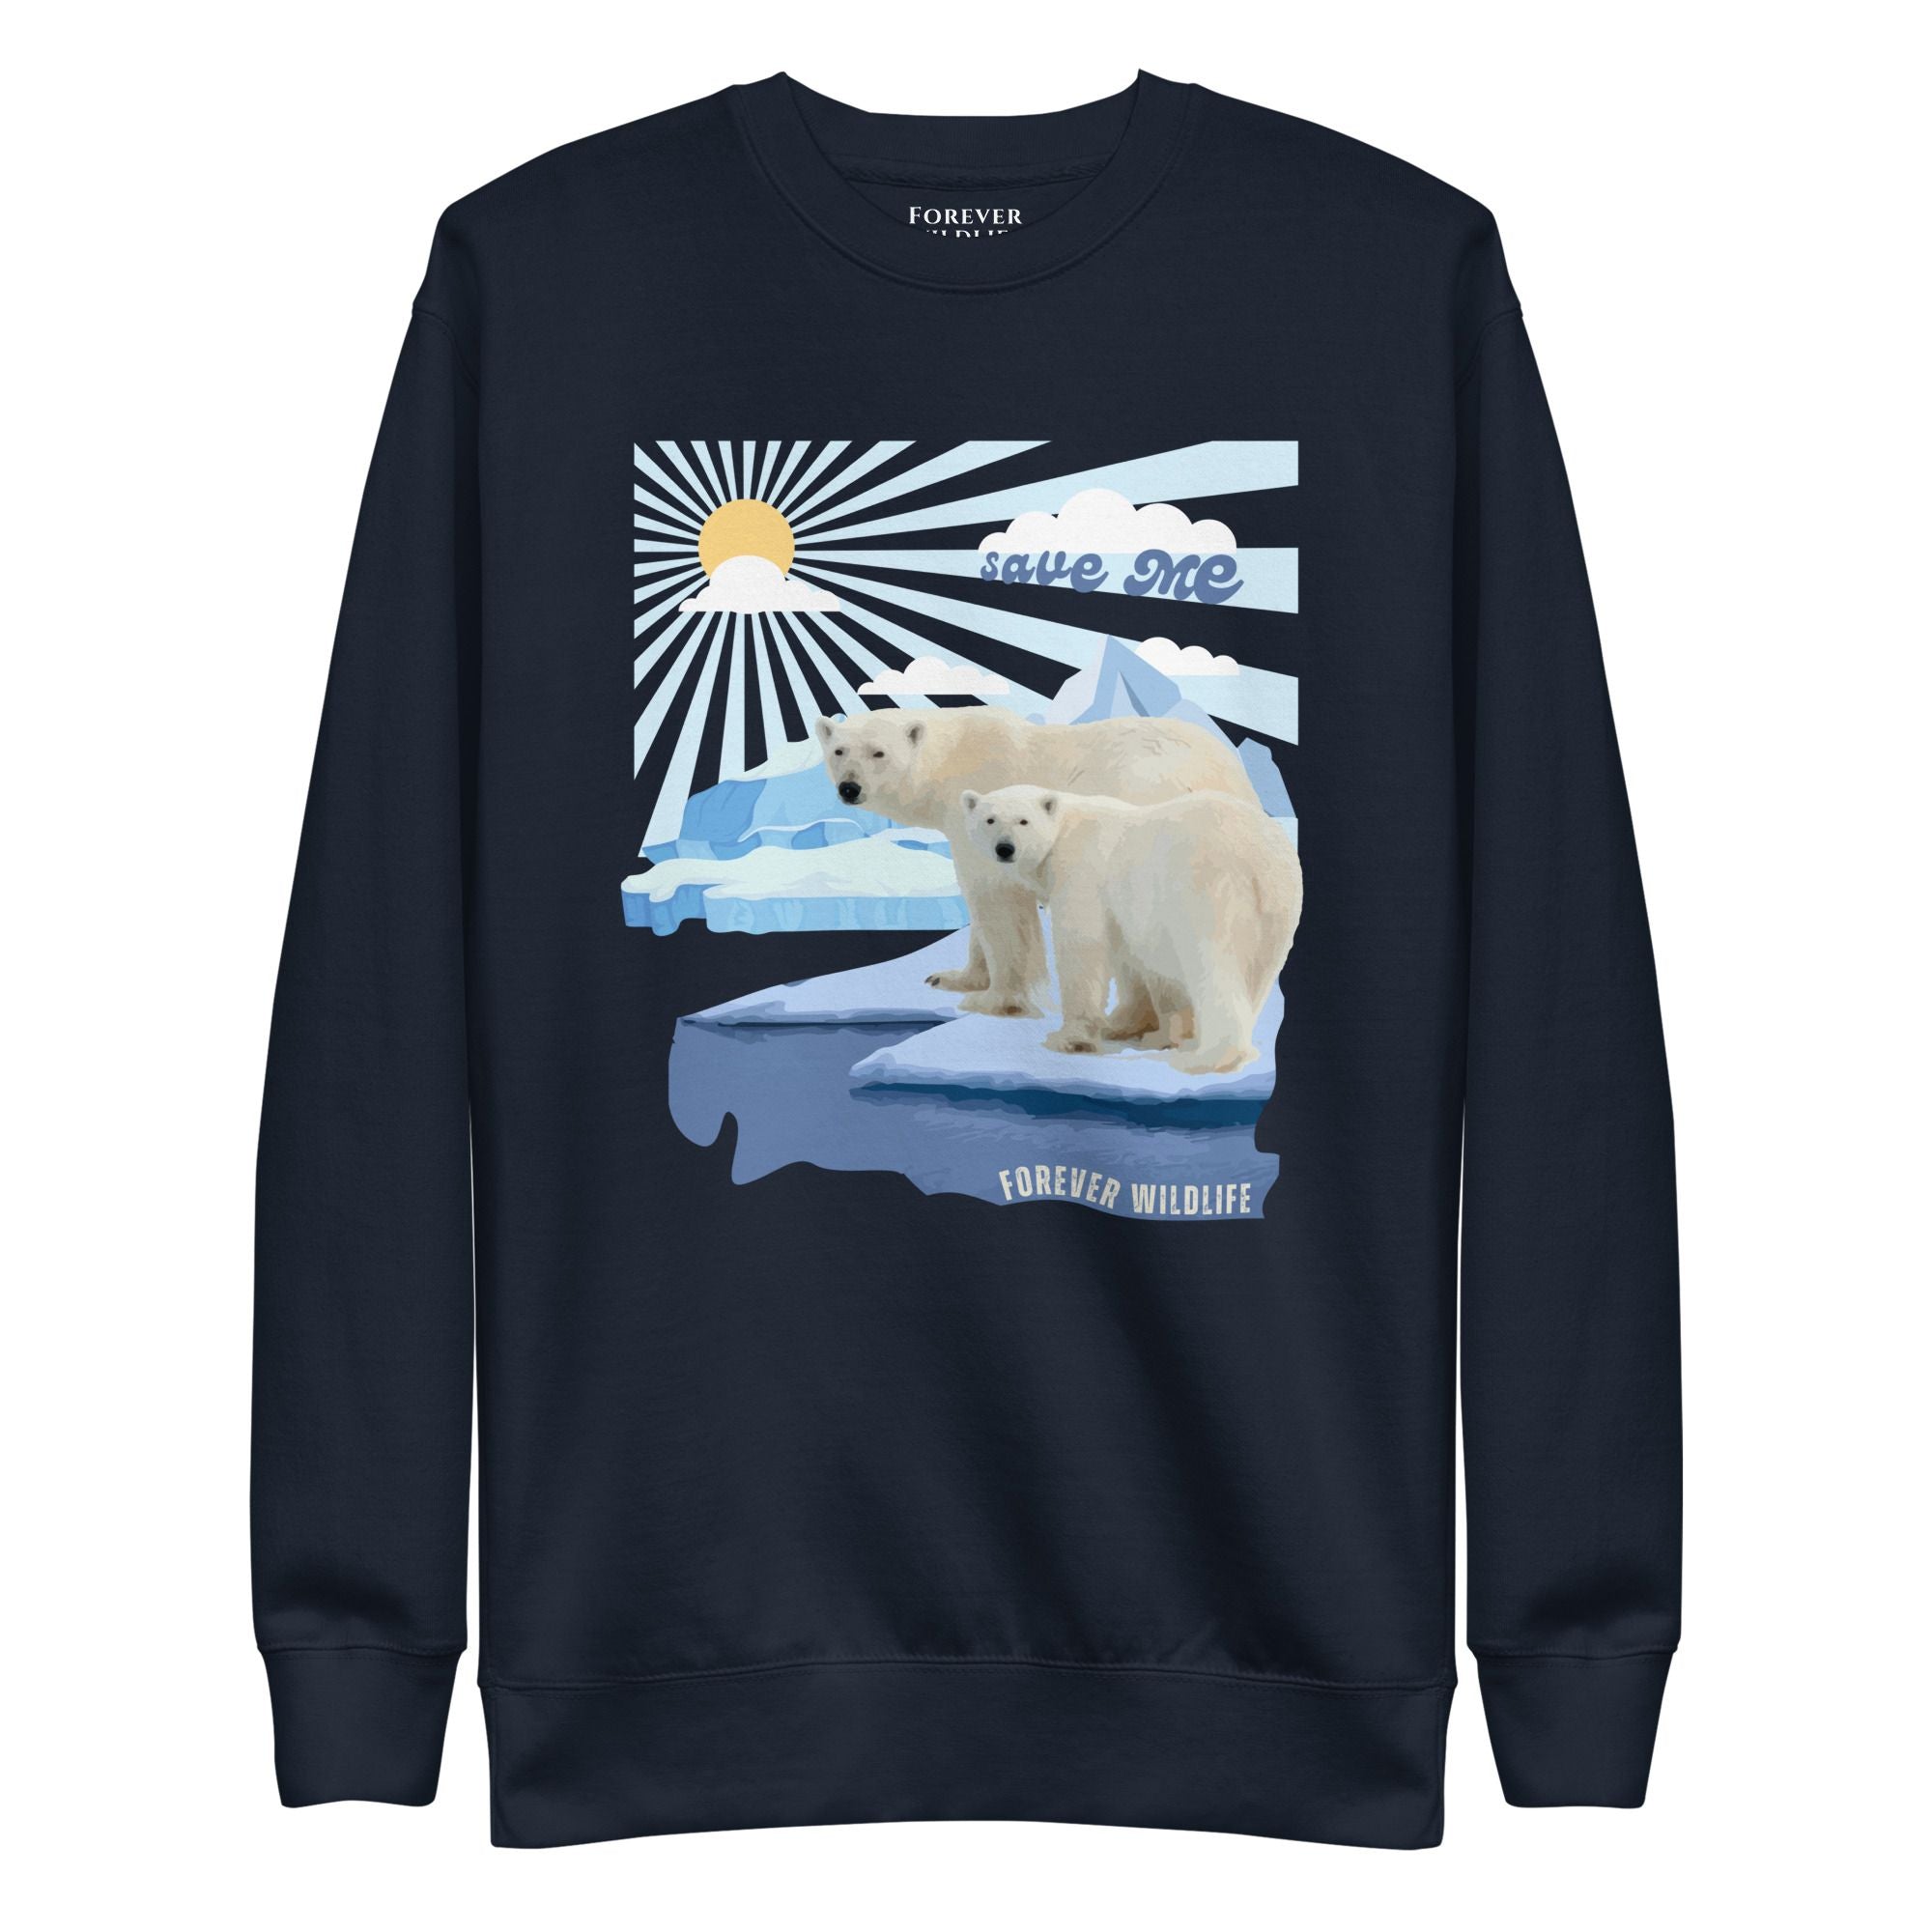  Polar Bears Sweatshirt in Navy-Premium Wildlife Animal Inspiration Sweatshirt Design with 'Save Me' text, part of Wildlife Sweatshirts & Clothing from Forever Wildlife.